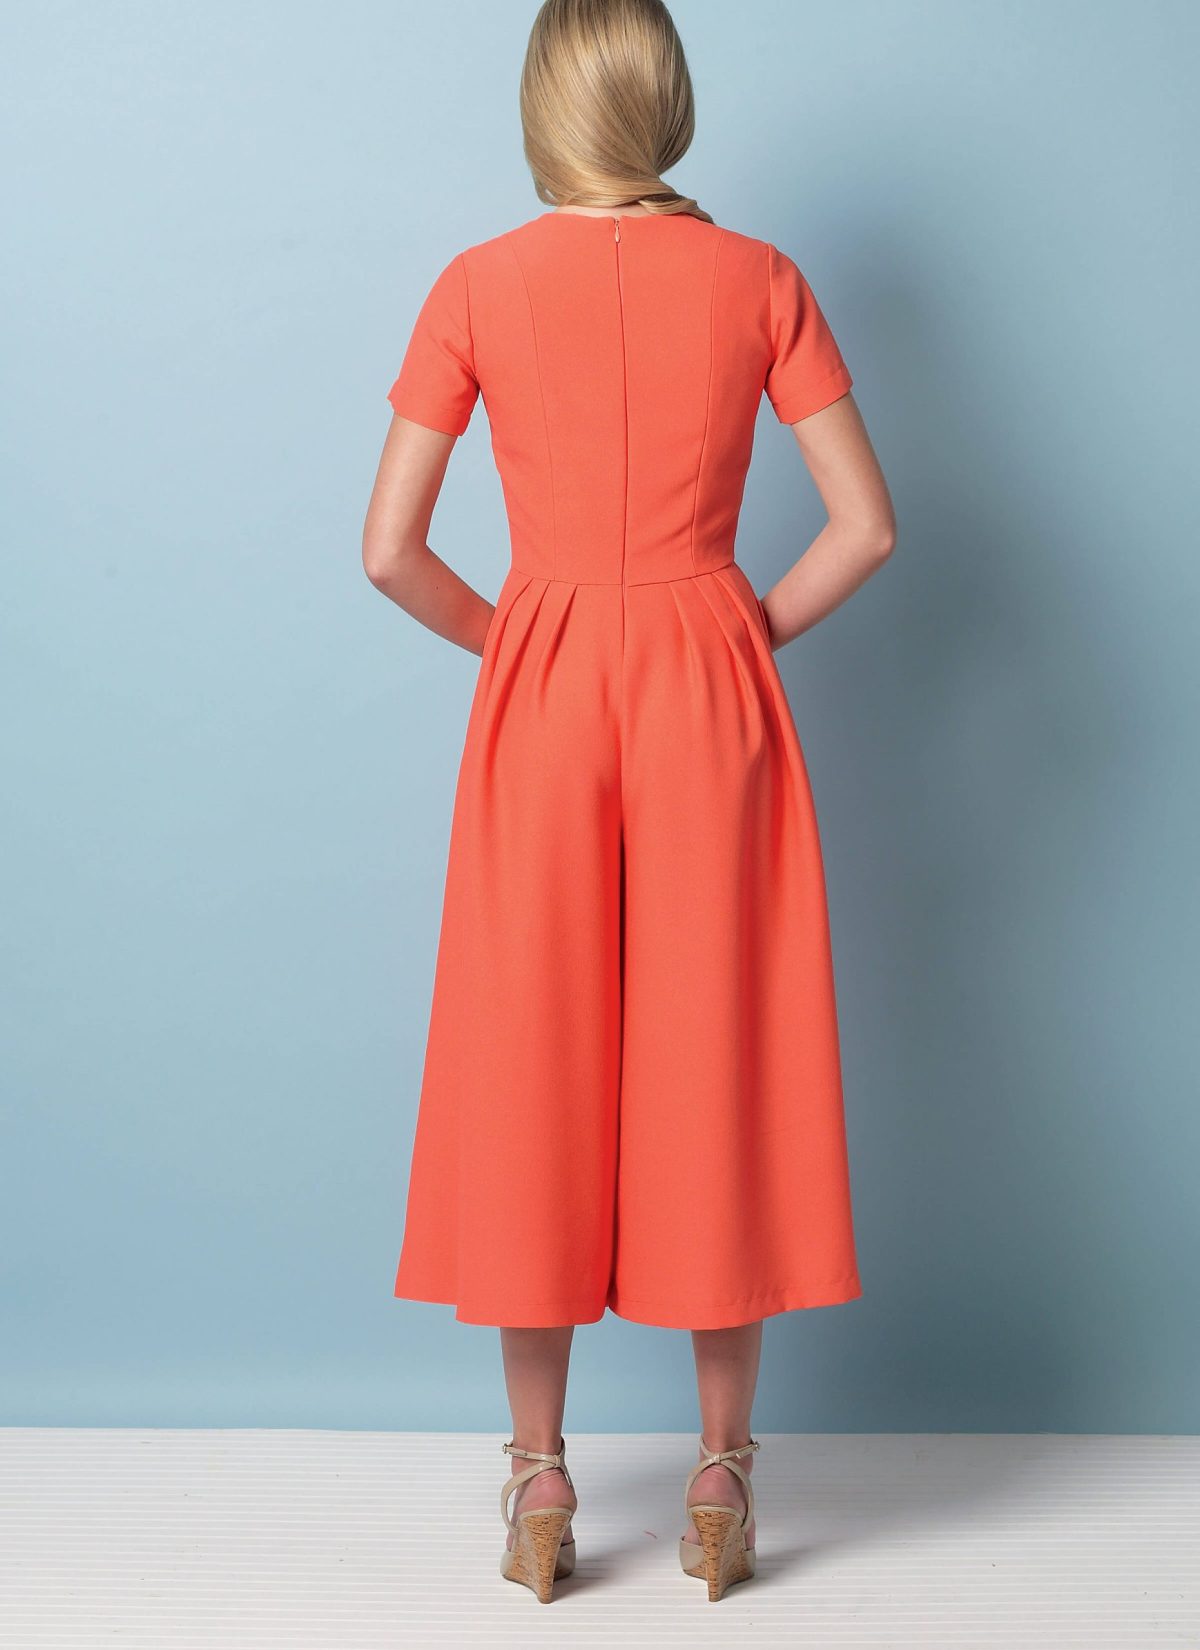 Vogue Patterns V9075 Misses'/Misses' Petite Dress and Jumpsuit